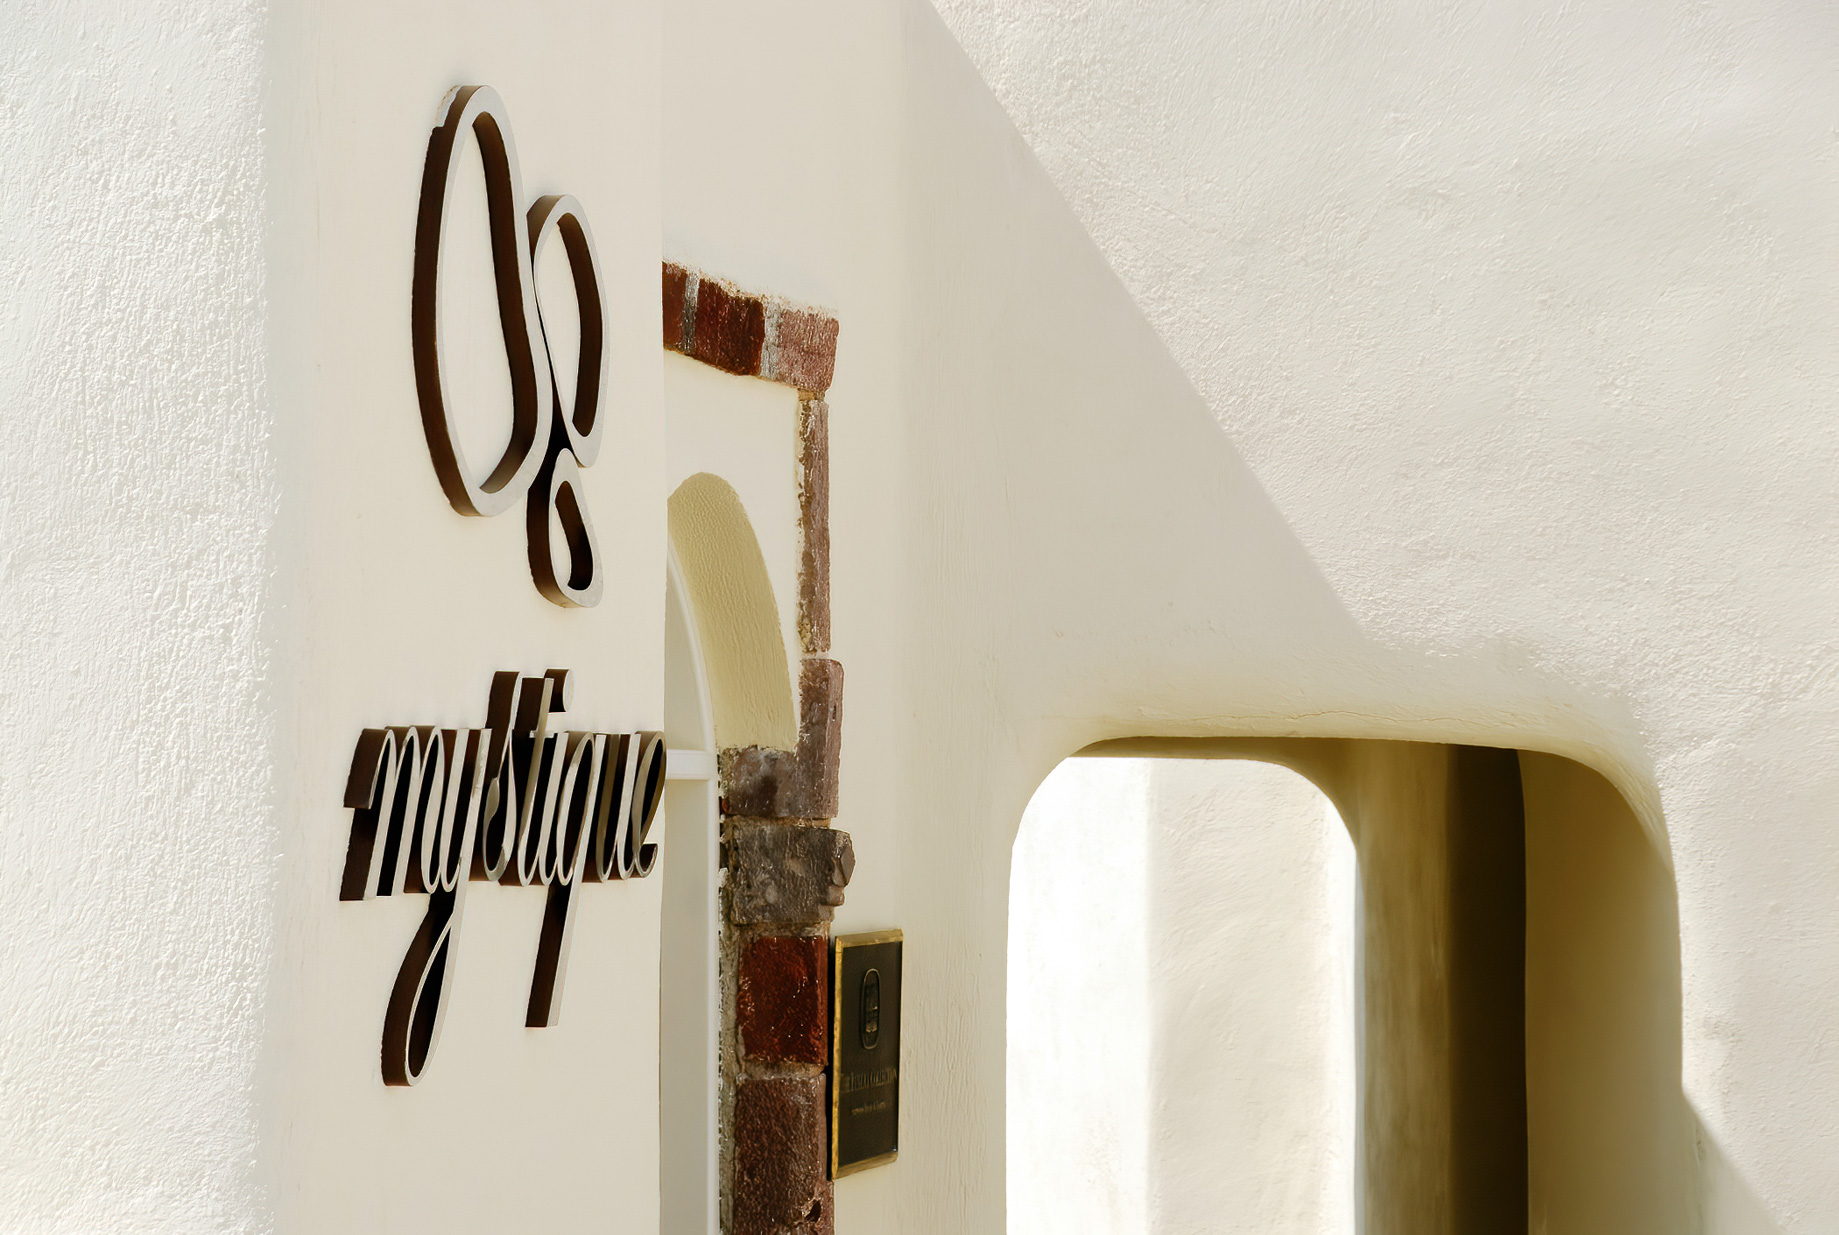 Mystique Hotel Santorini – Oia, Santorini Island, Greece – Entrance